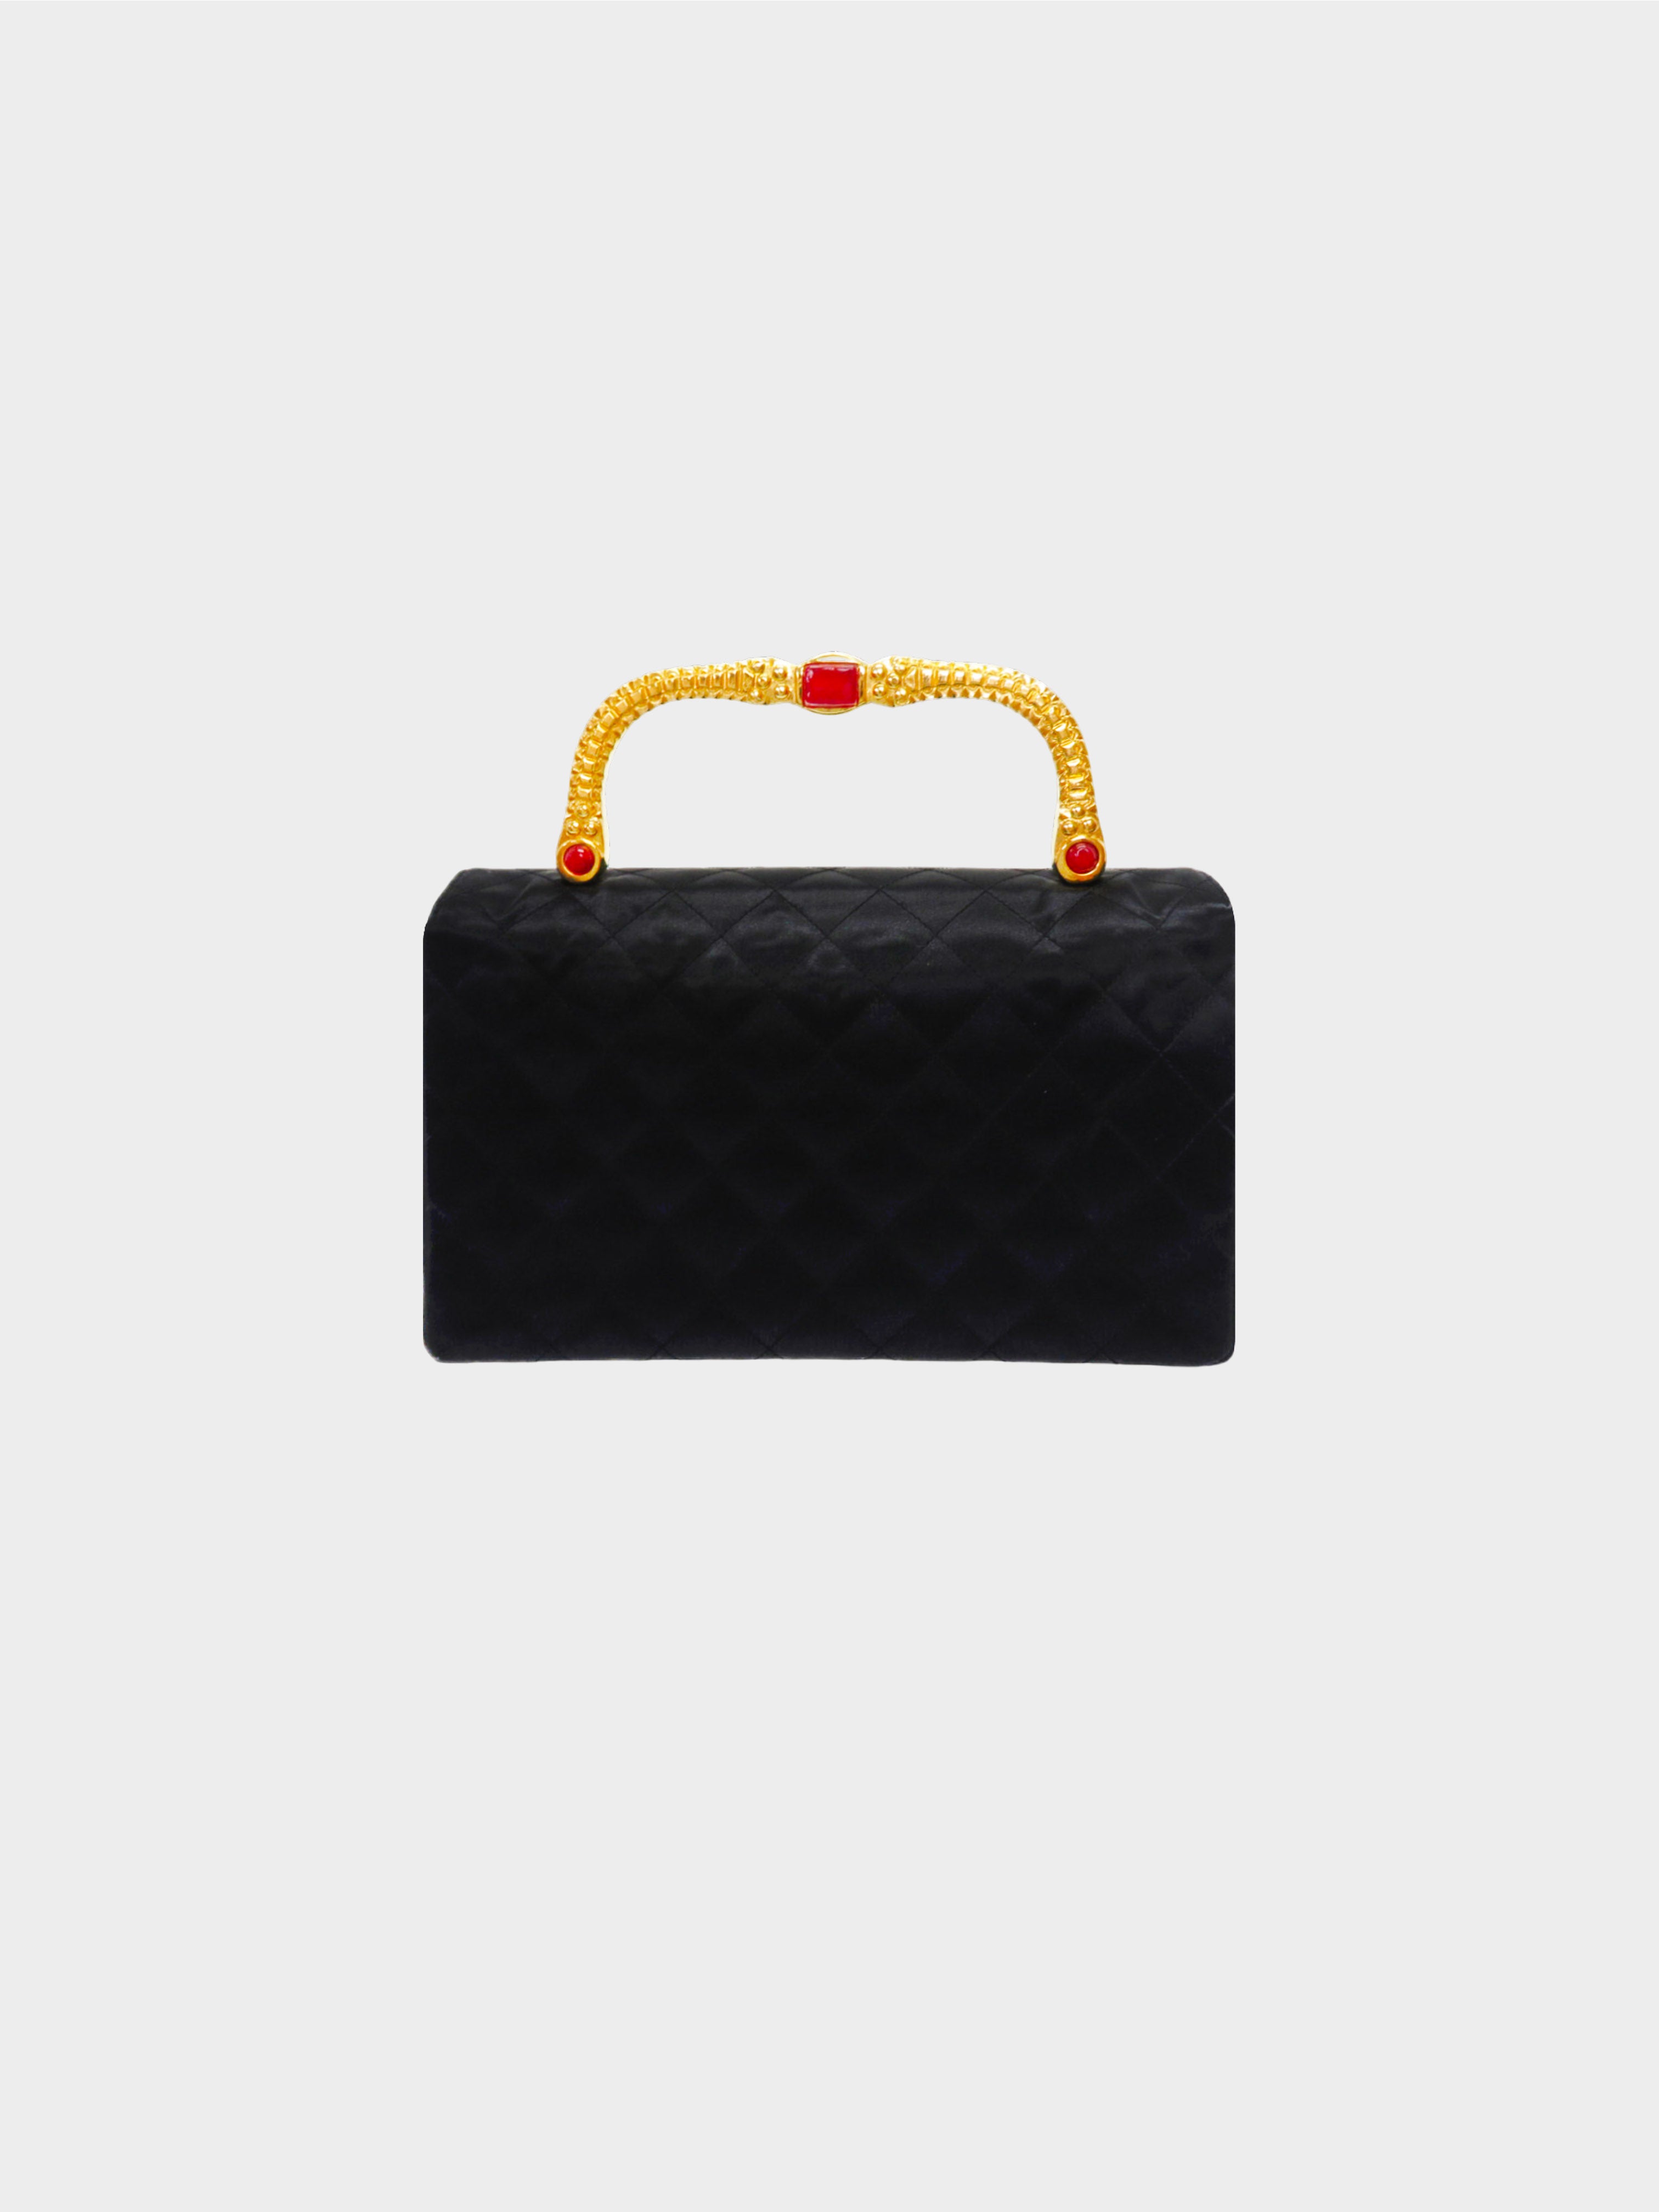 Chanel 2000s Rare Black Satin Gold Handle Turn Lock Bag